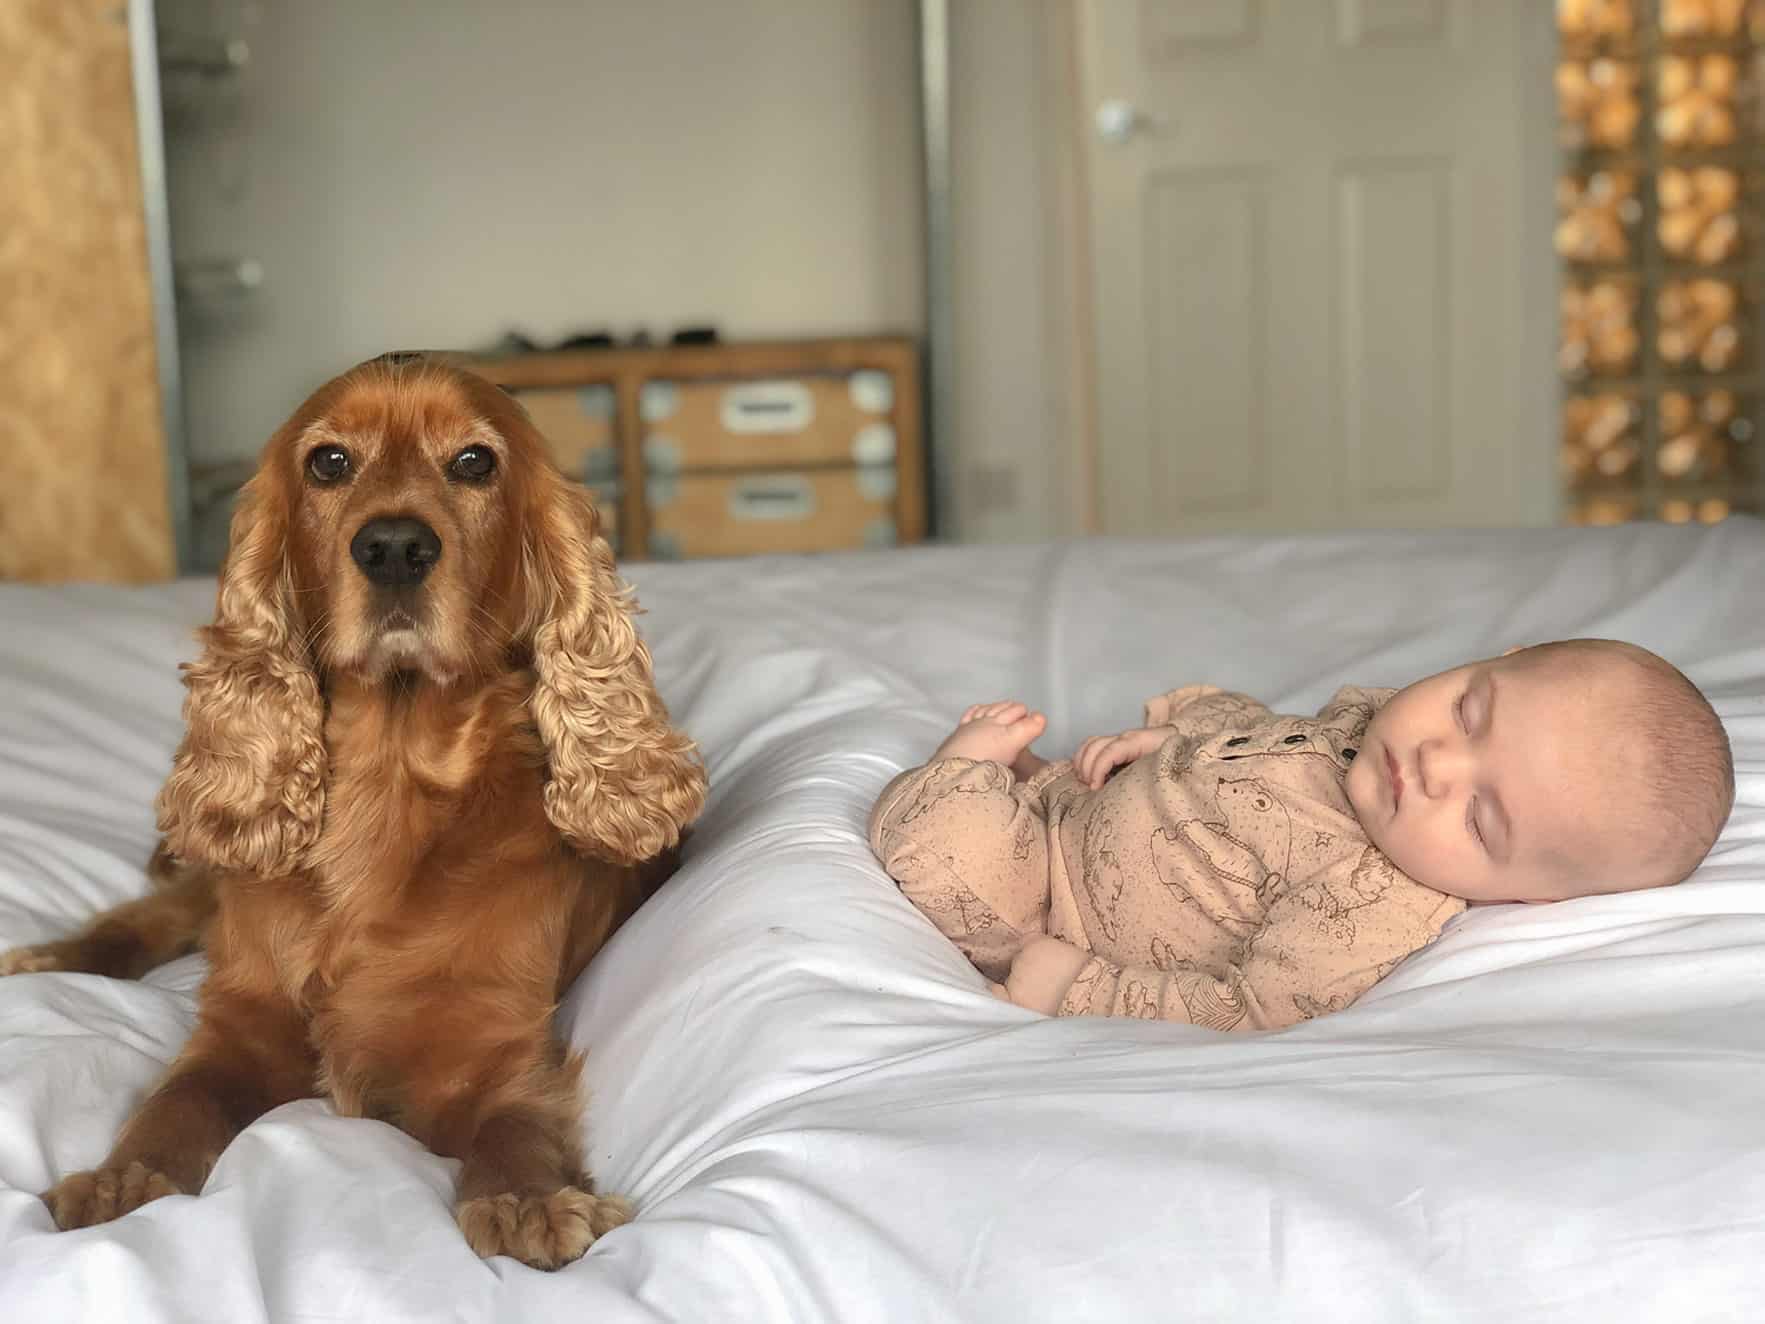 newborn and dog photos at home